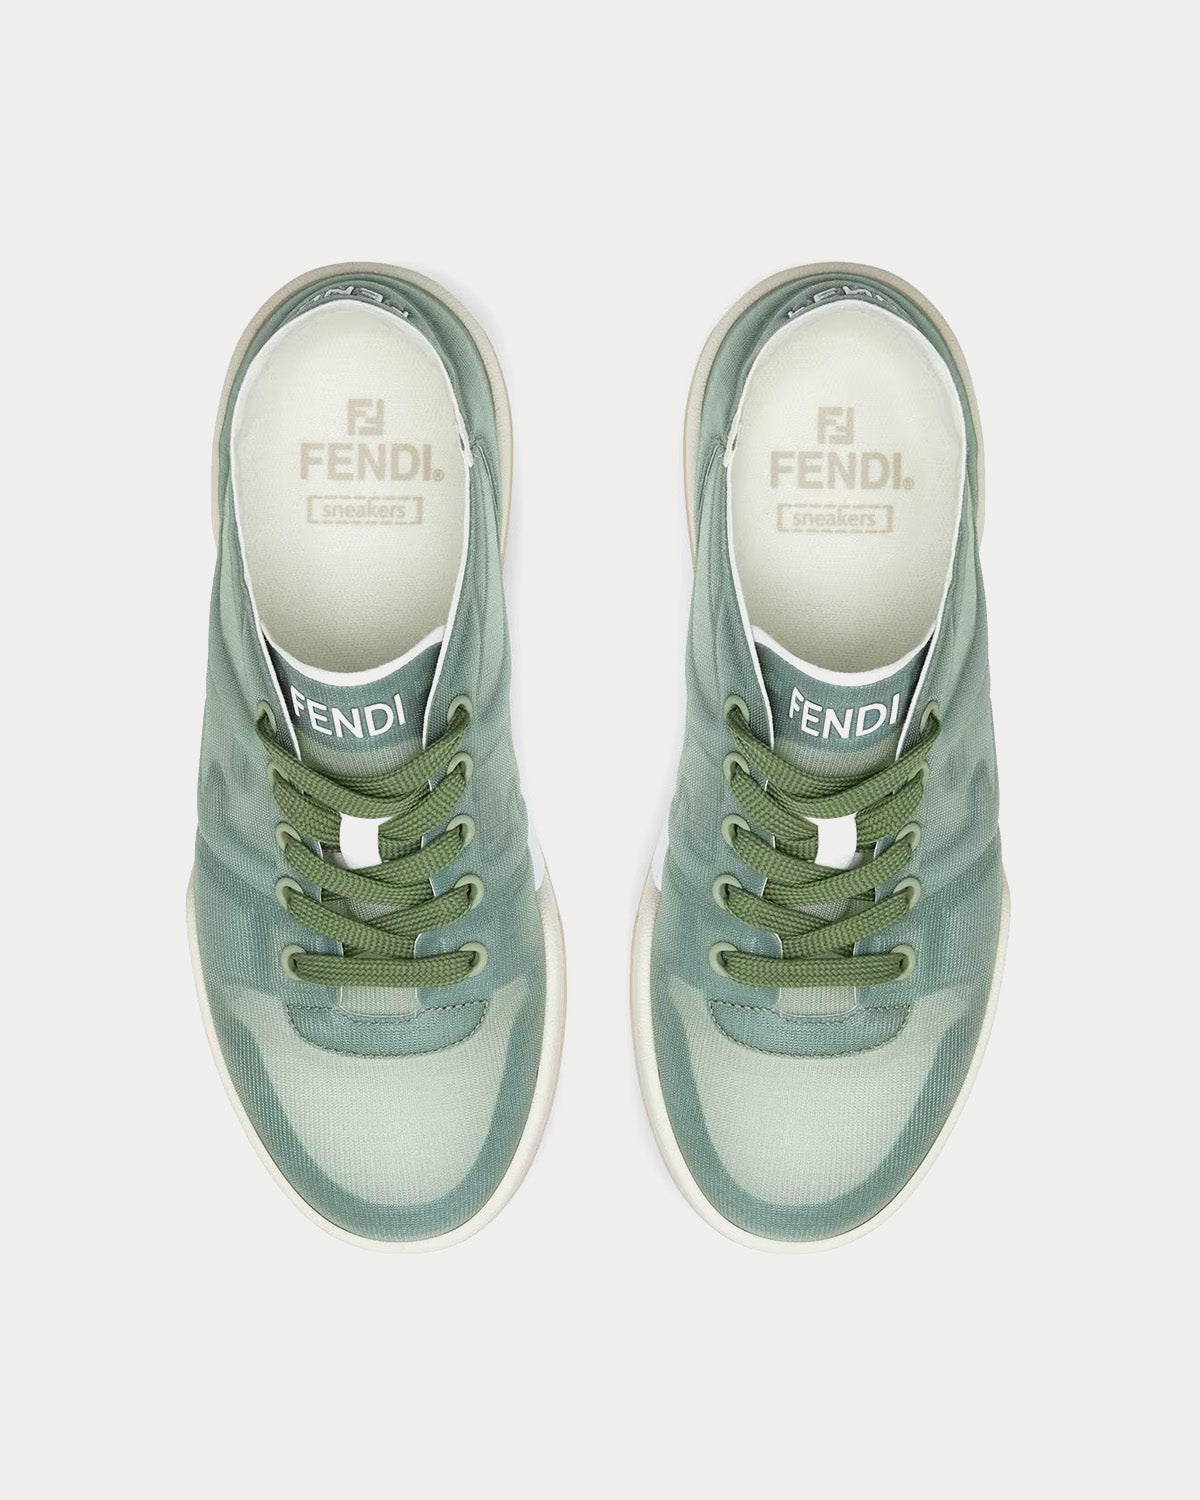 Fendi - Match Mesh Green Low Top Sneakers